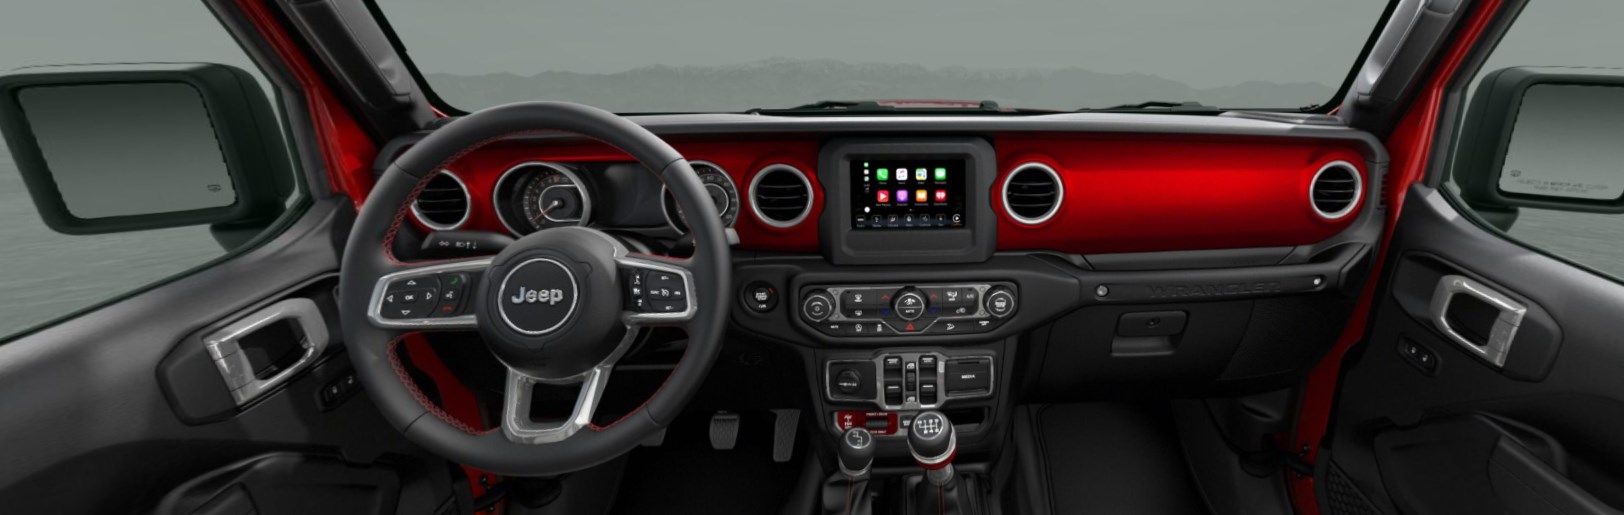 2020 Jeep Wrangler Unlimited Rubicon Front Interior Dashboard Picture